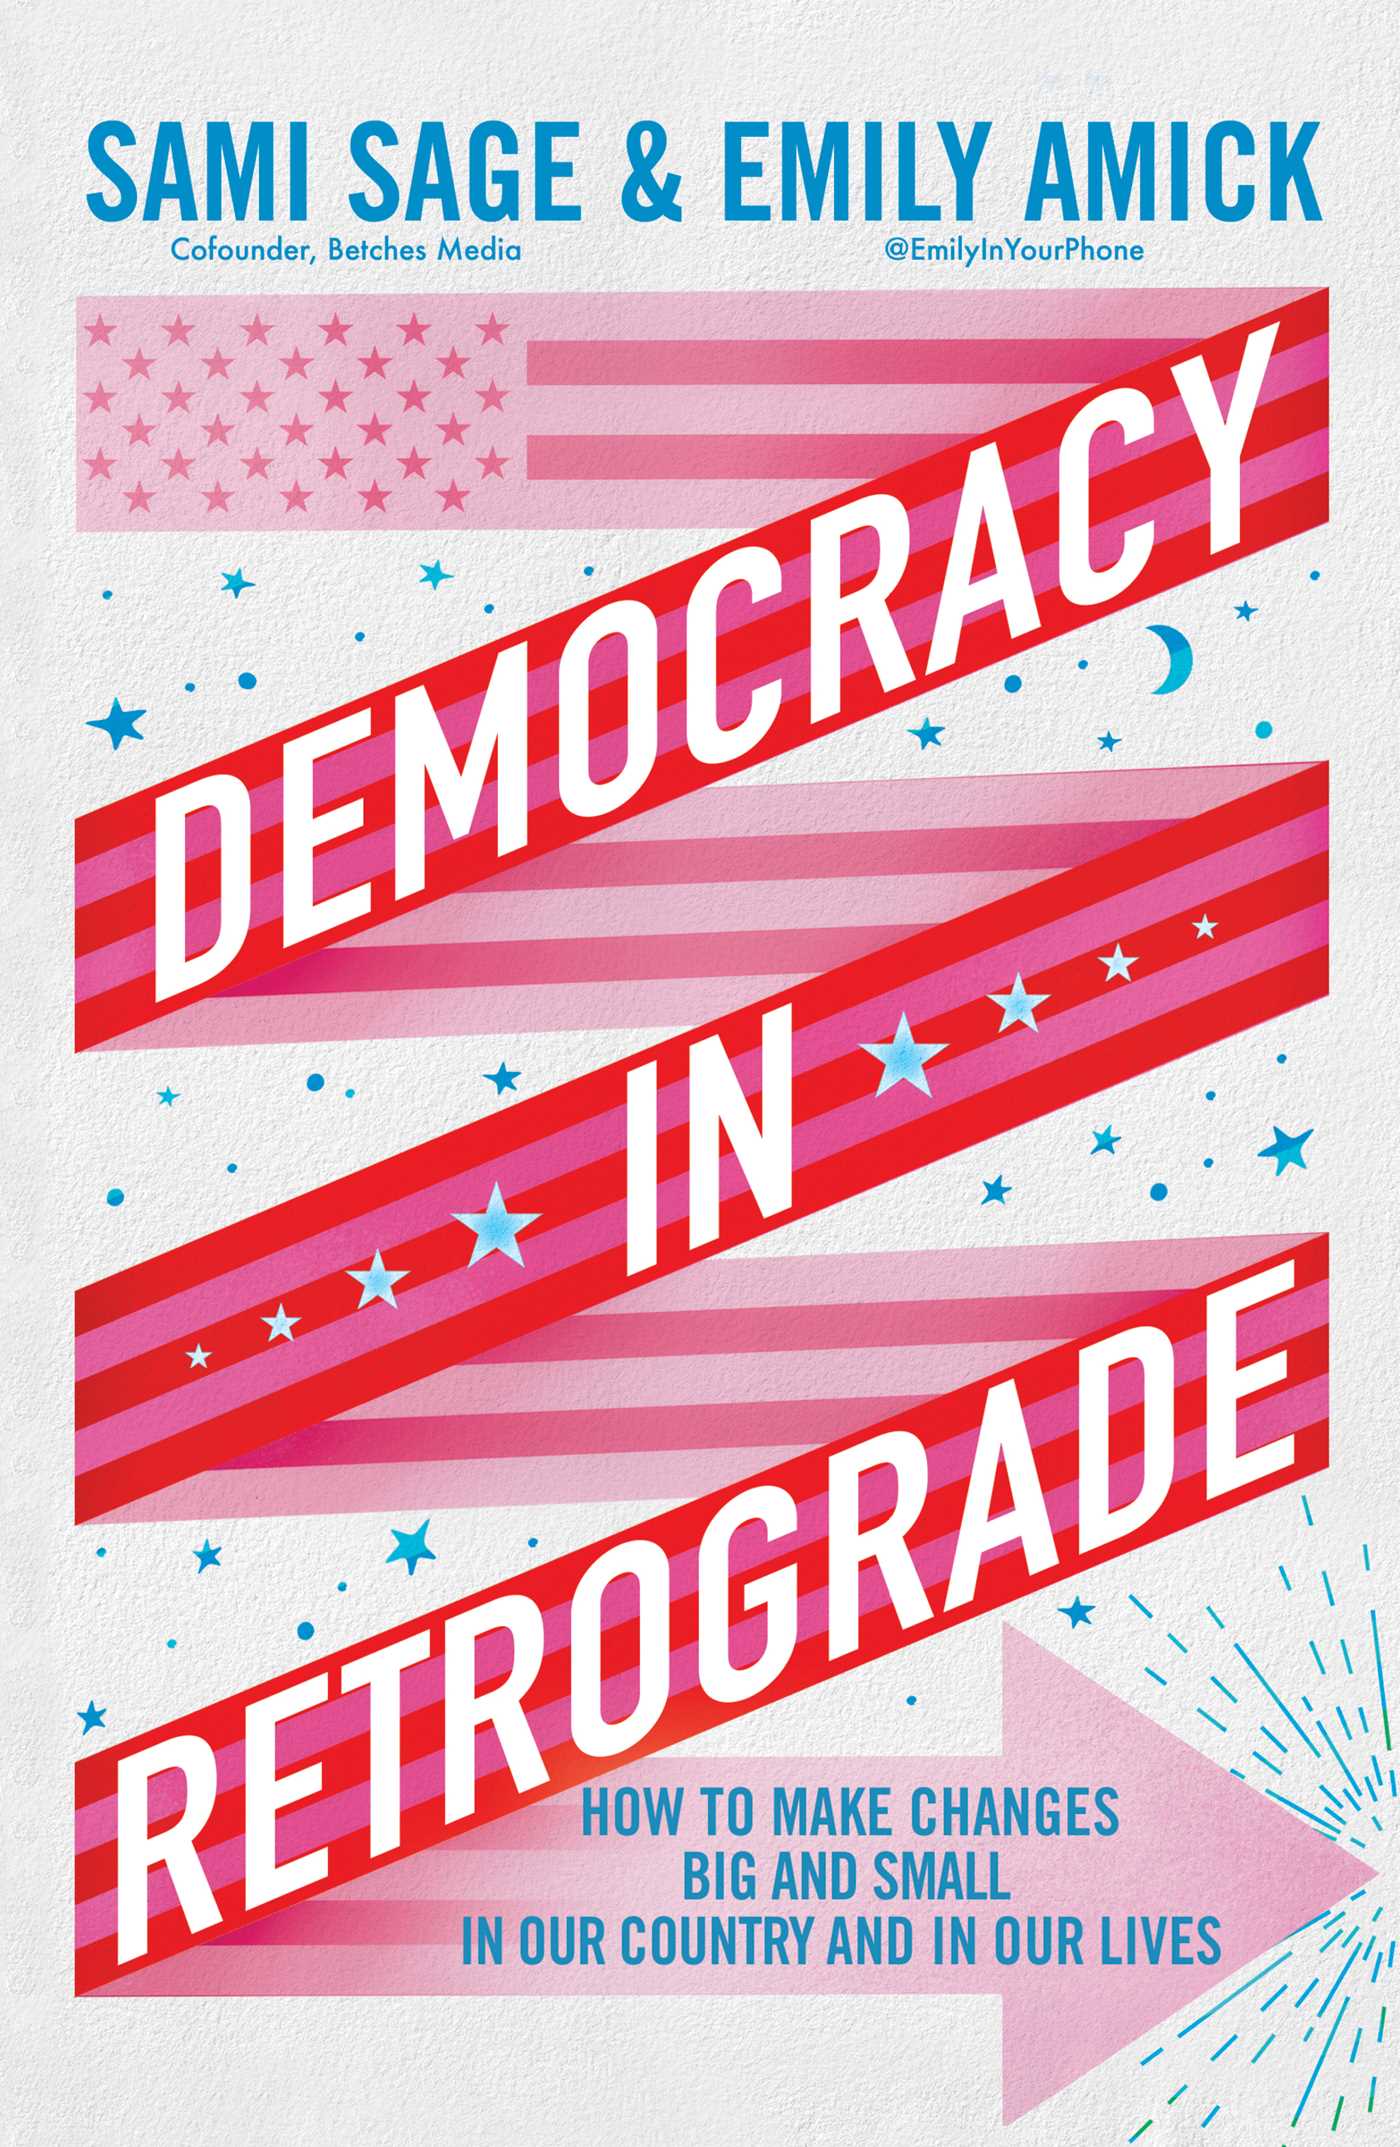 Image for "Democracy in Retrograde"